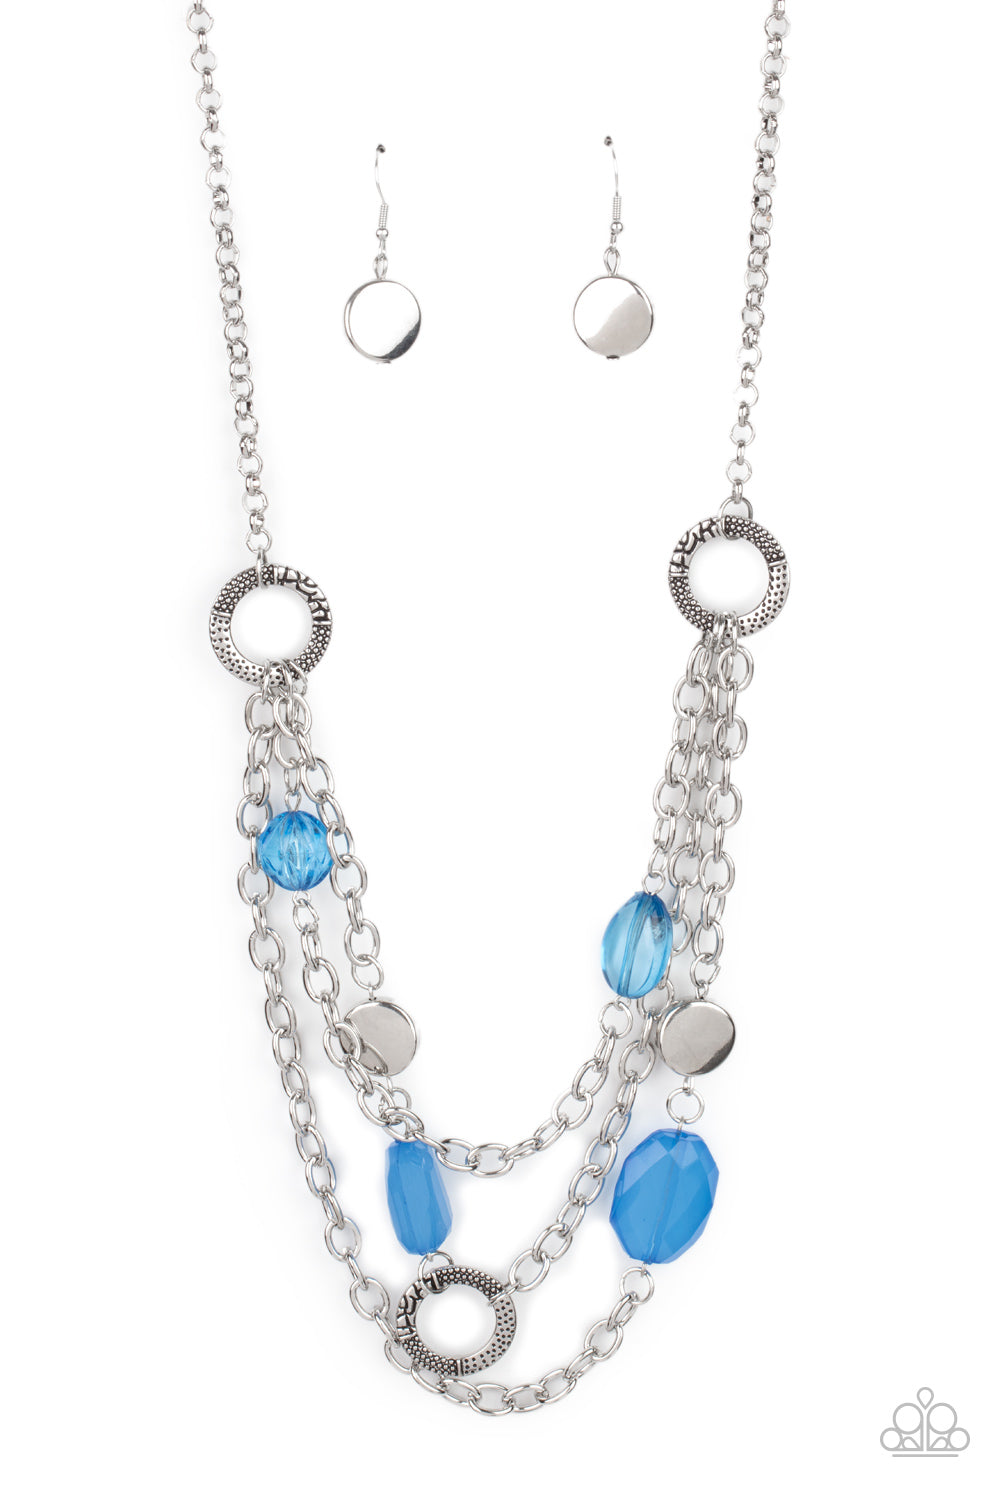 Oceanside Spa - Blue Necklace freeshipping - JewLz4u Gemstone Gallery